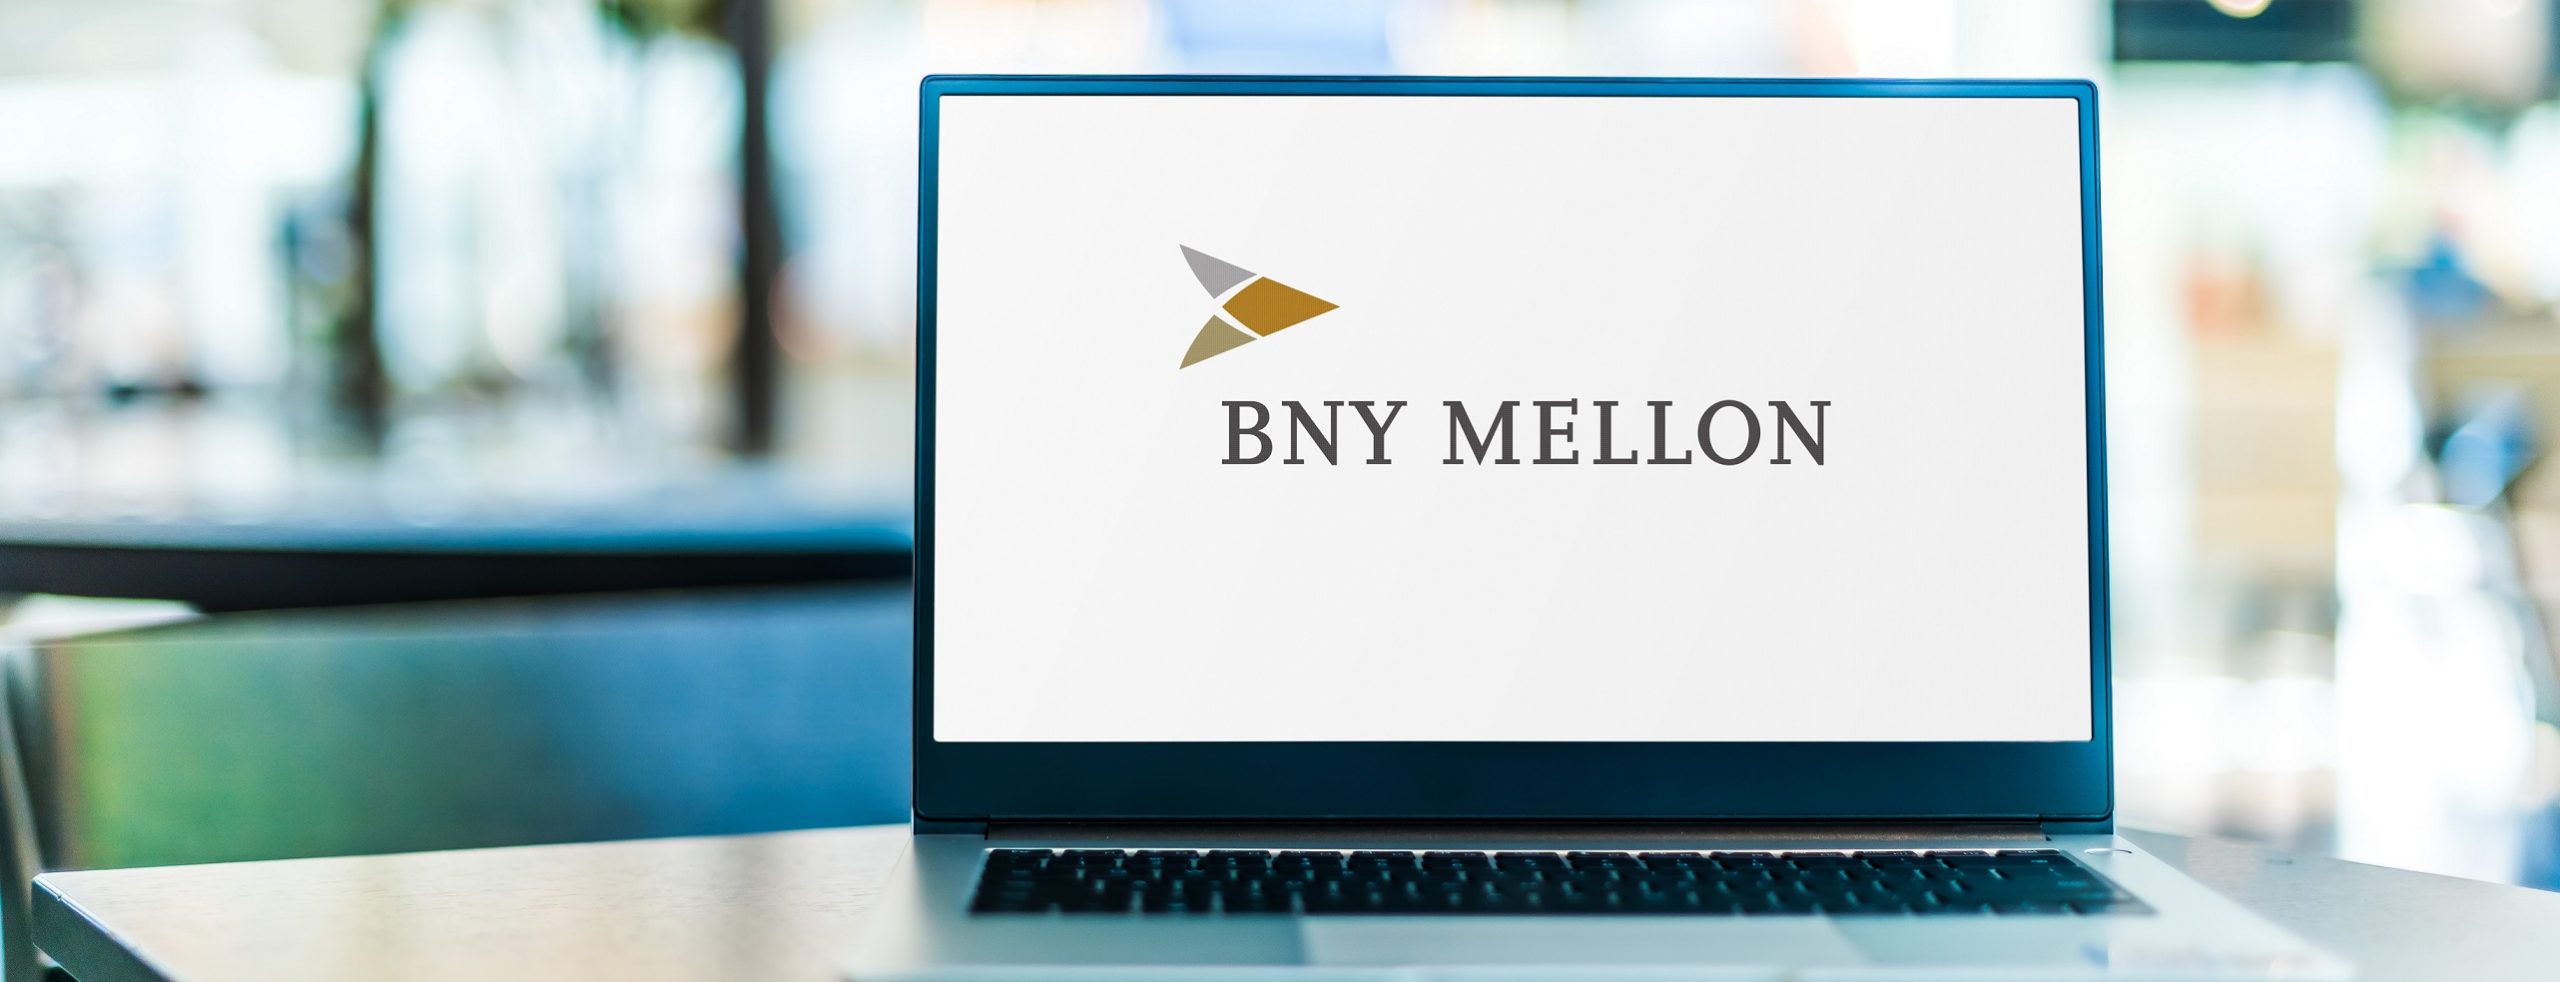 bny-mellon-announces-collaboration-with-future-investment-initiative-institute-mea-finance